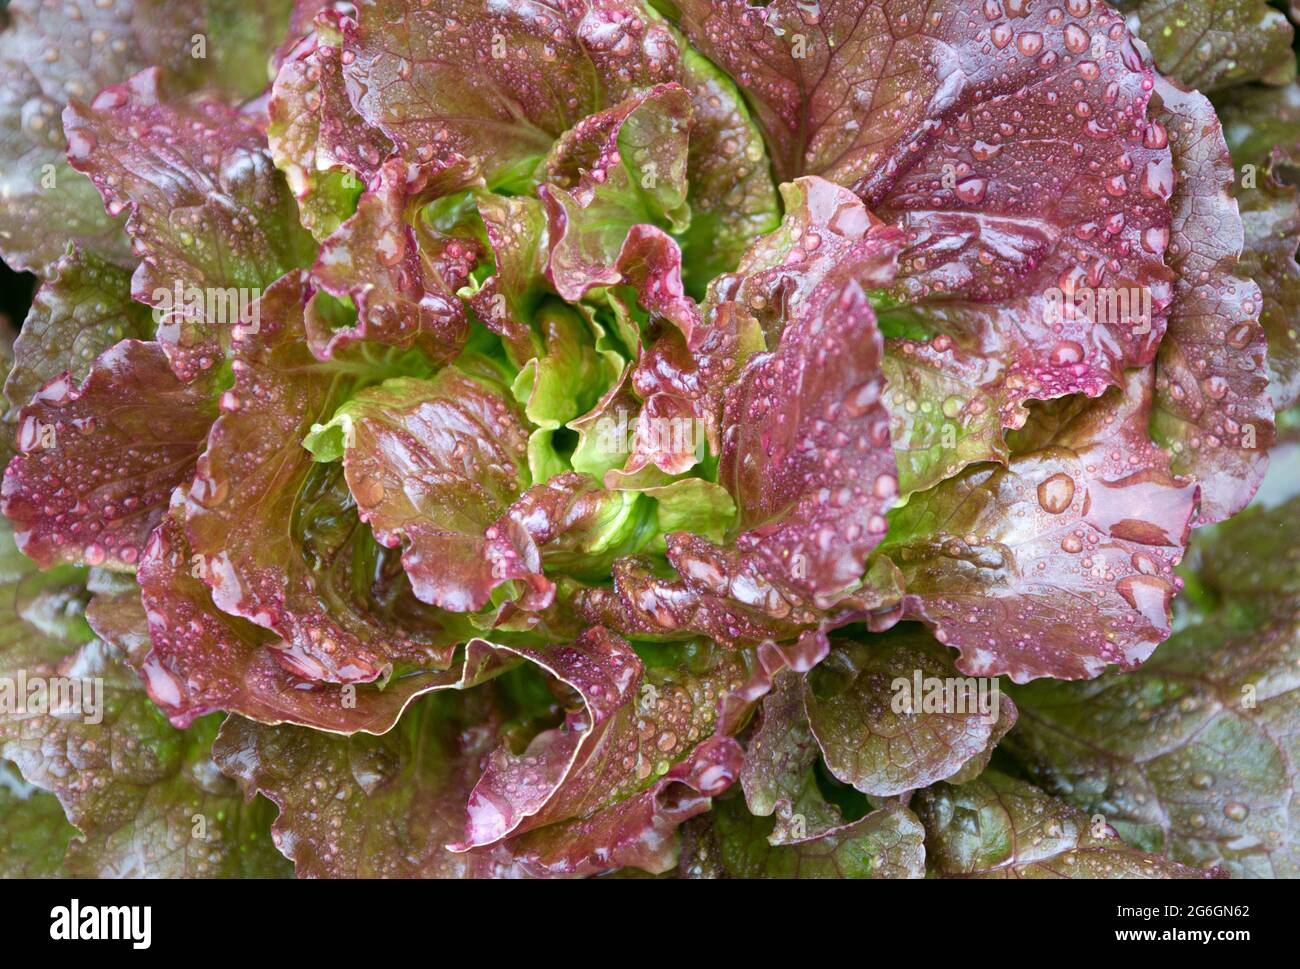 Batavia lettuce plant Stock Photo